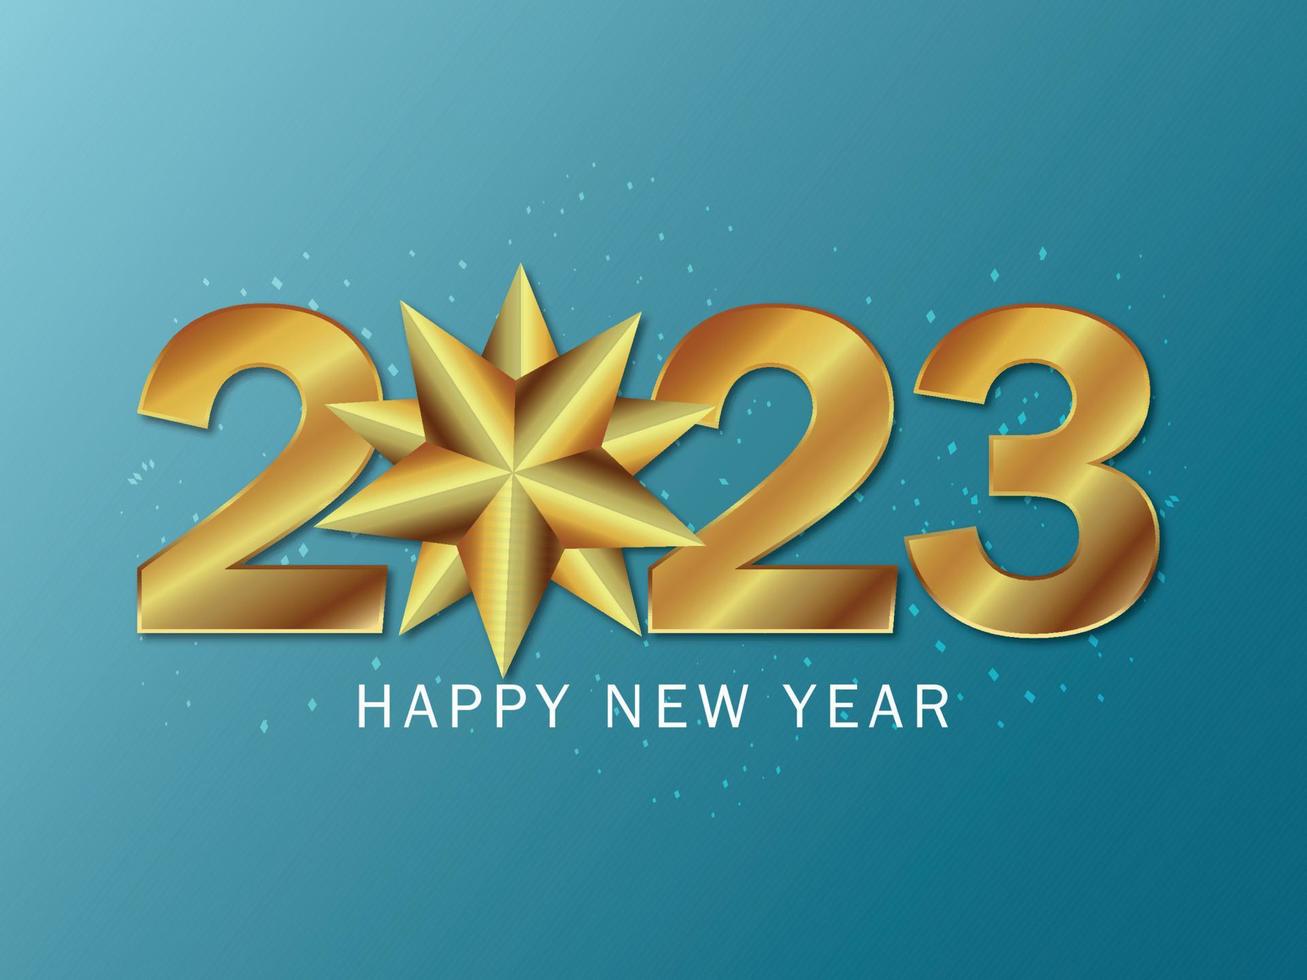 Happy new year 2023 celebration background vector